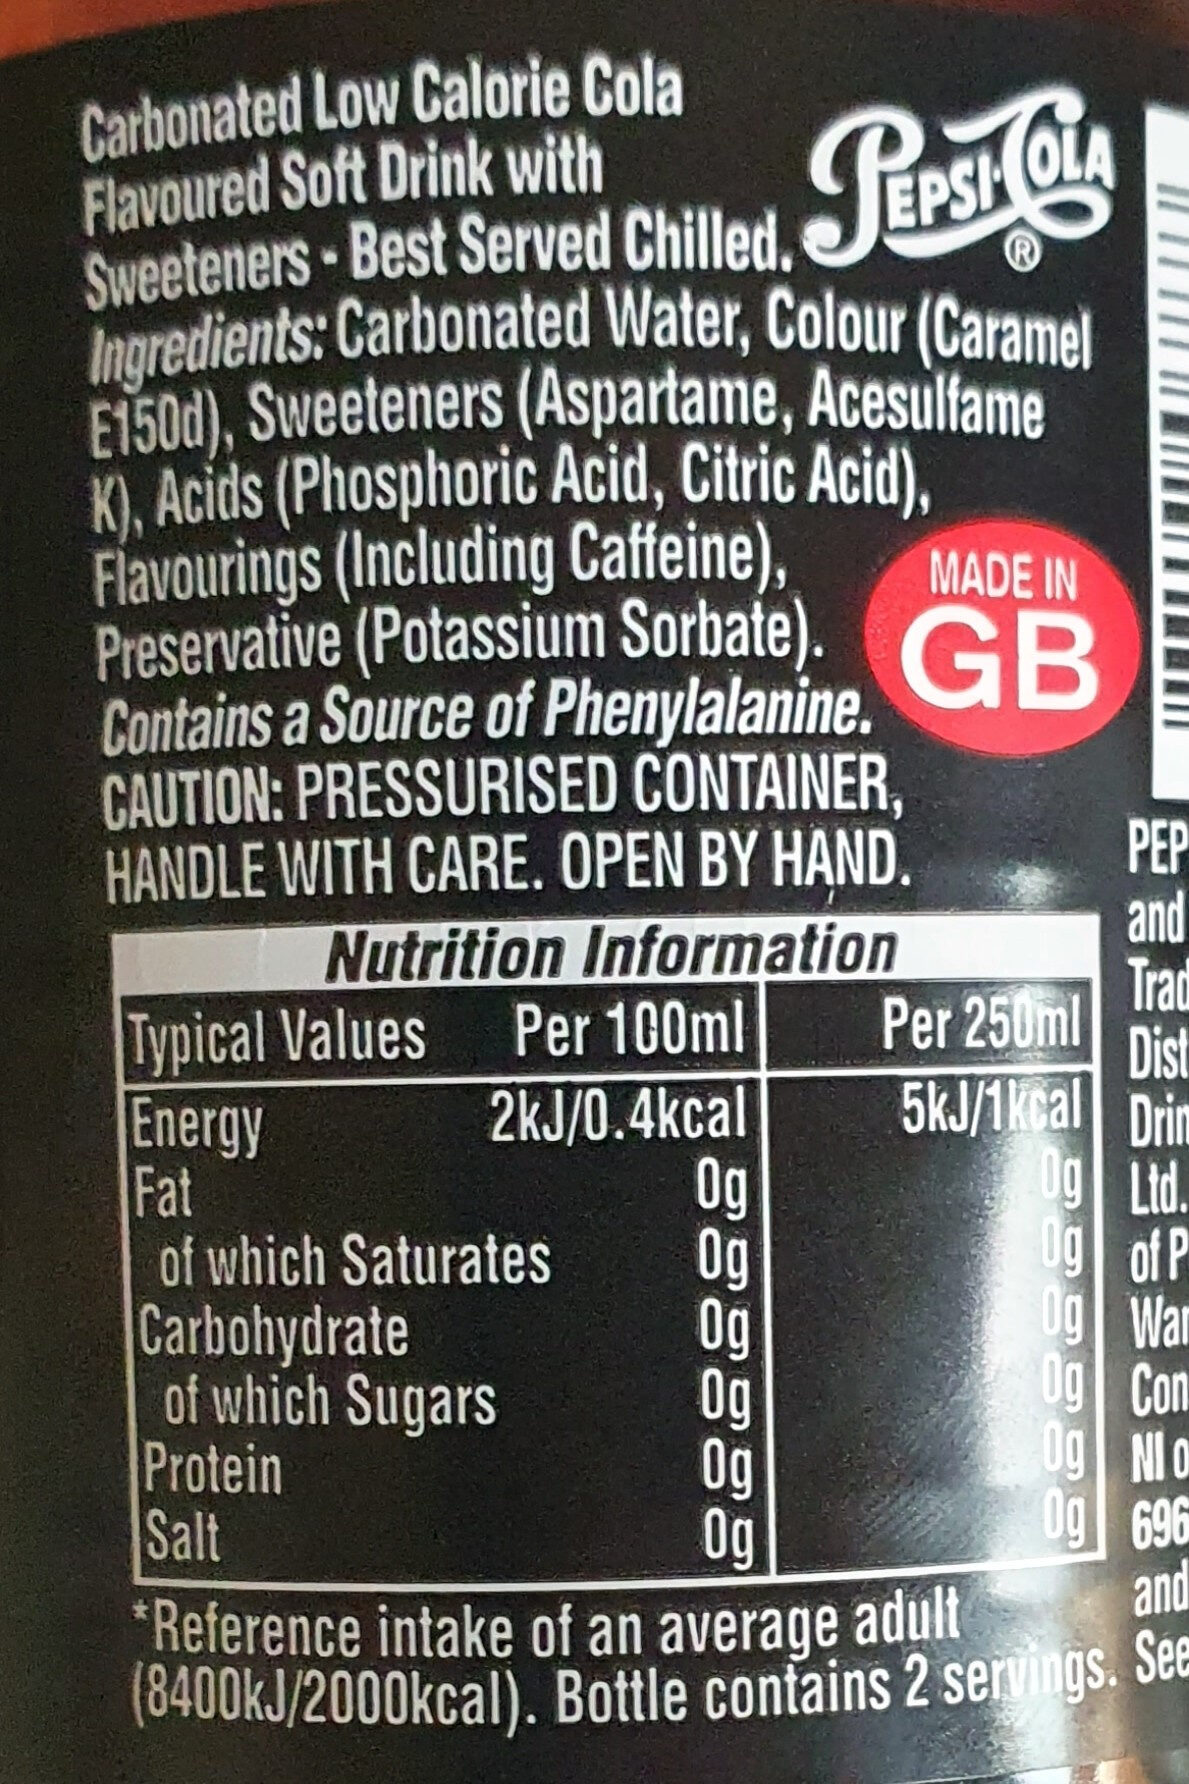 Pepsi MAX - Ingredients & Nutritional Information